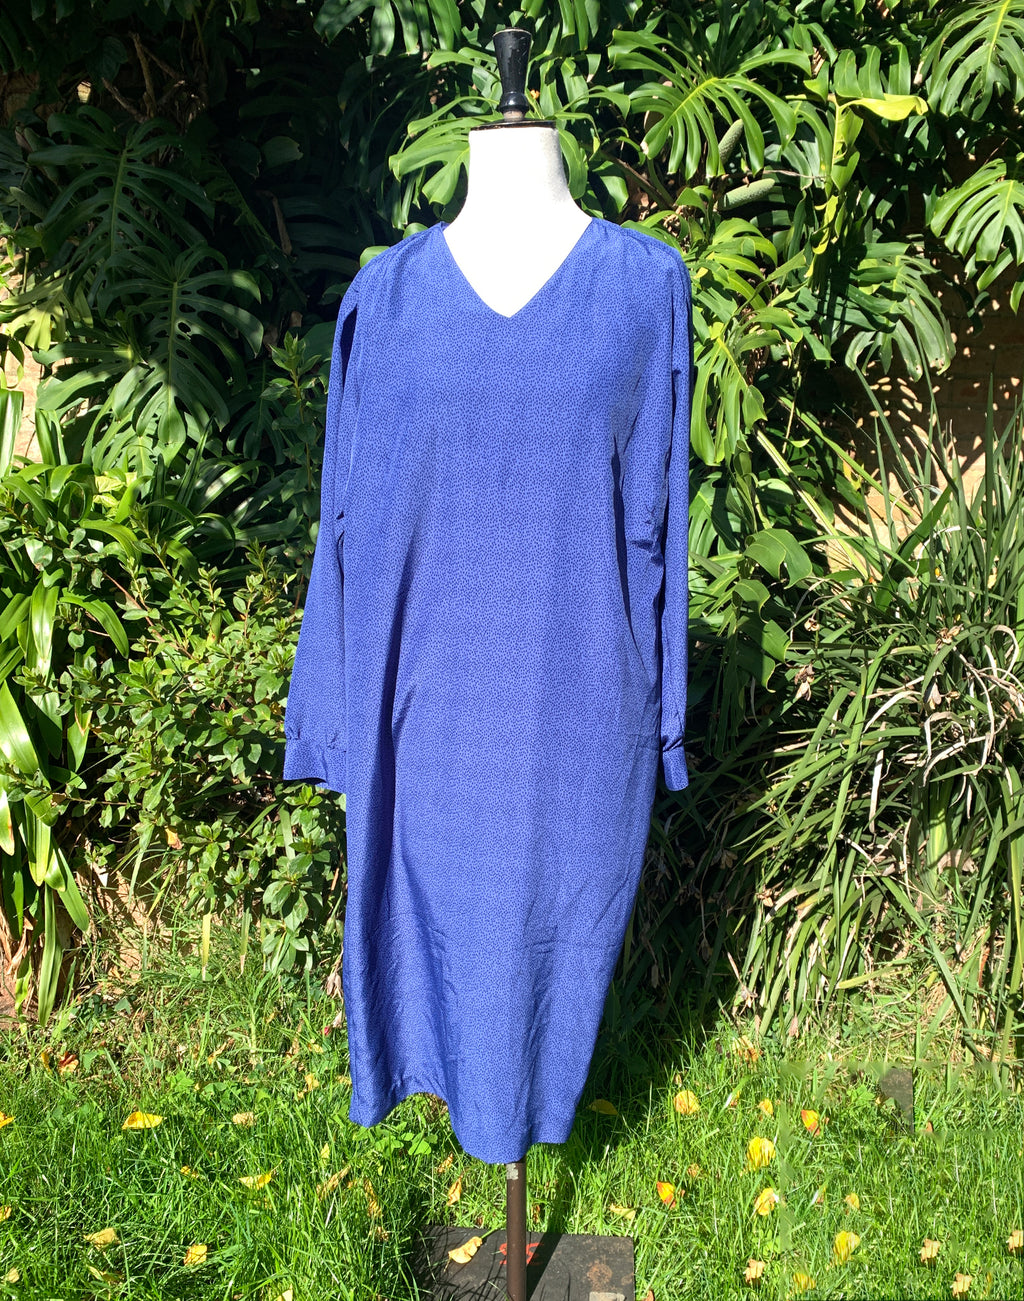 Vintage 80's Electric Blue Batwing Dress - Size S / M